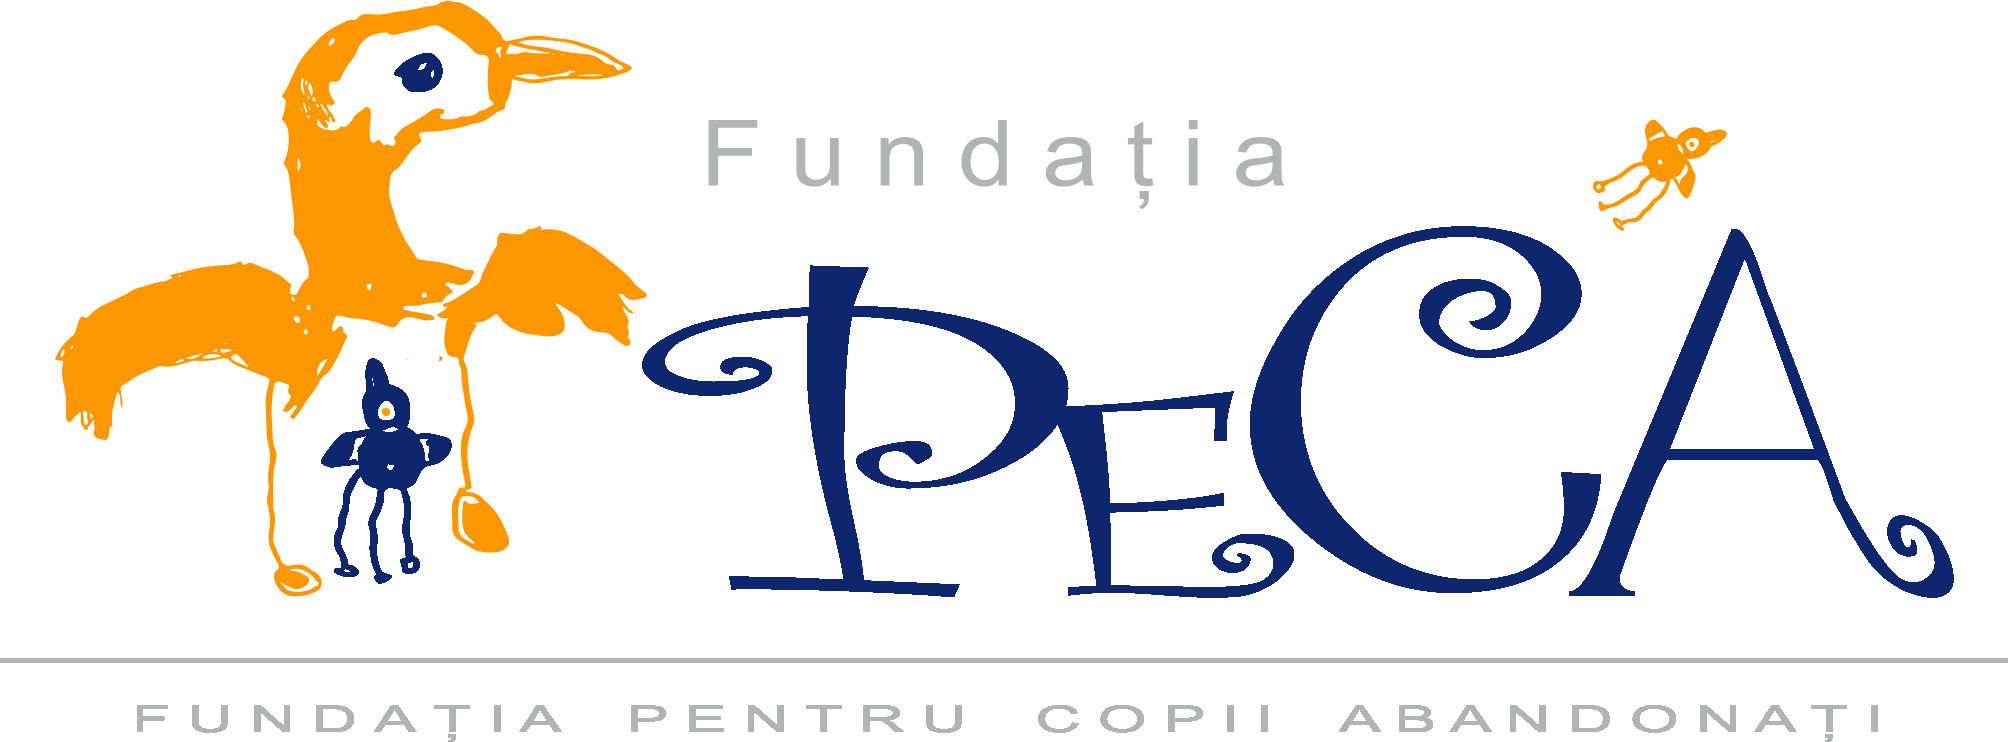 Fundatia pentru Copii Abandonati logo